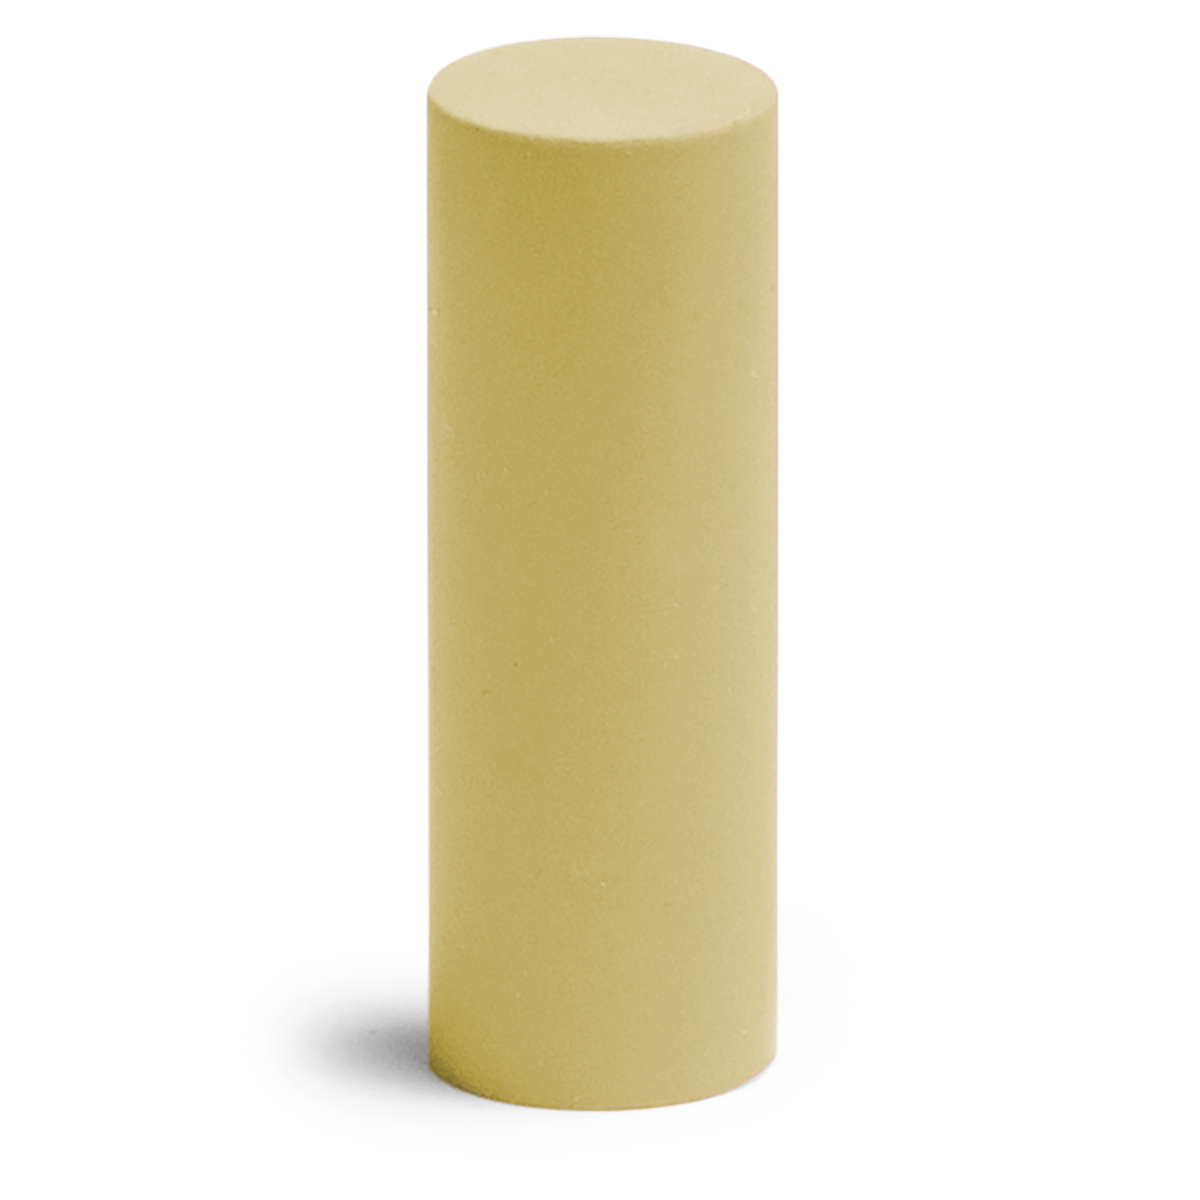 Polierer Goldstar, gelb, Zylinder, Ø 6 x 22 mm, Korn fein, nicht montiert, 12 Stück